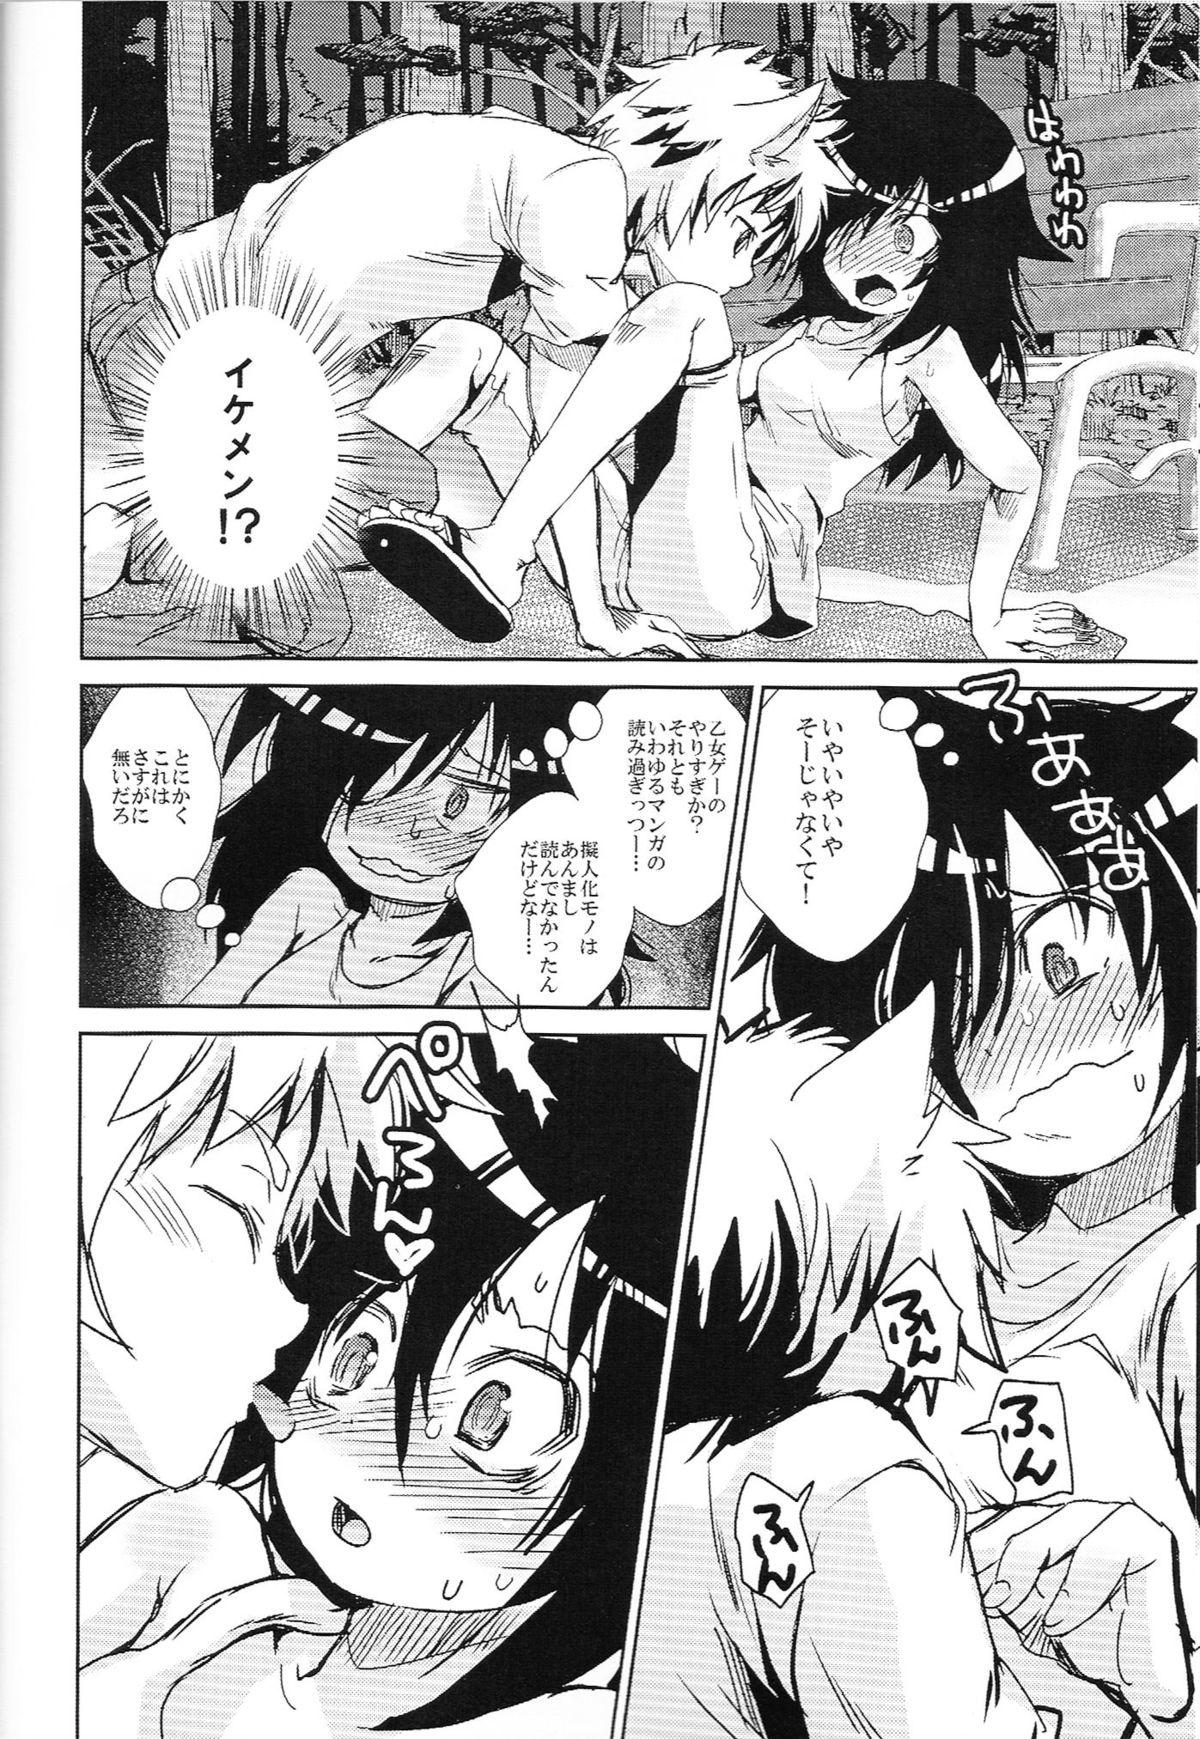 Strange Watashi ga Moteru noha Neko ni dake! - Its not my fault that im not popular Nalgona - Page 5